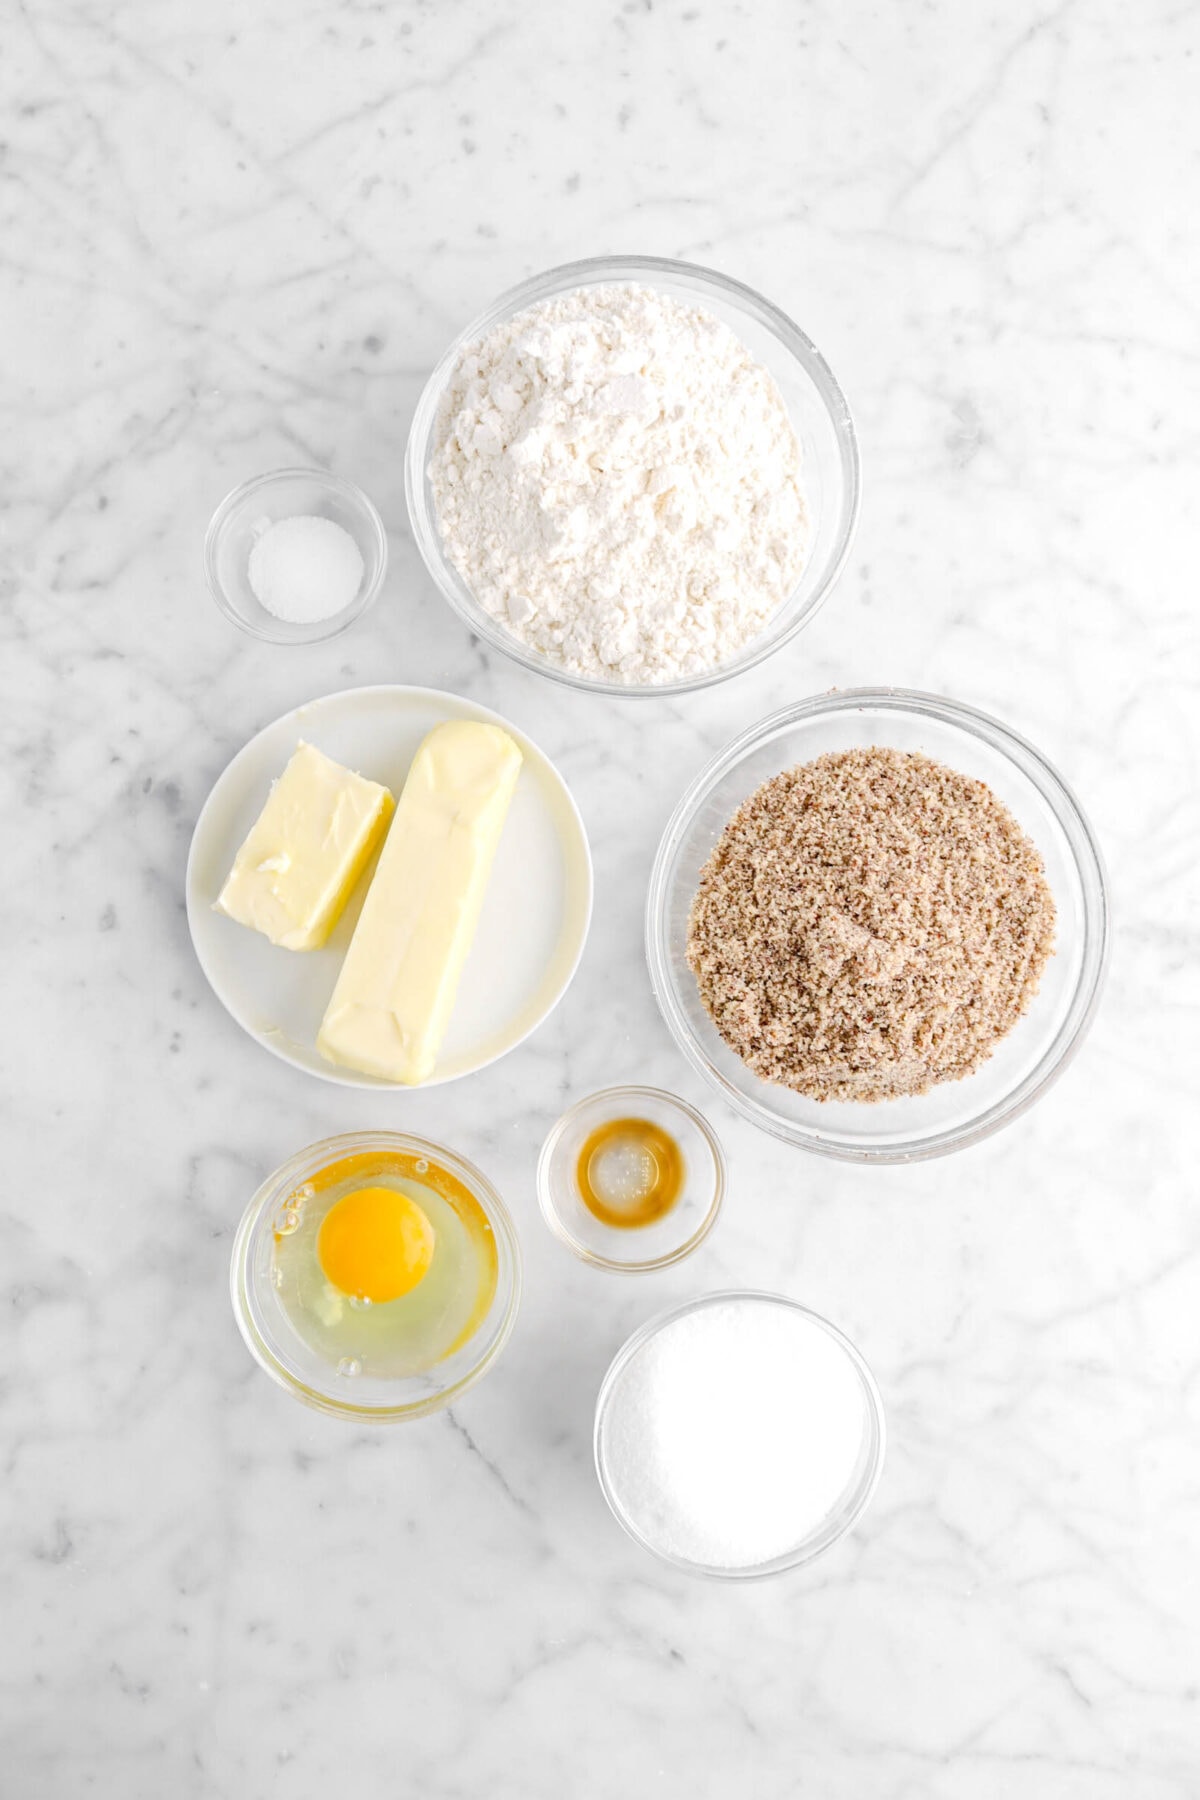 flour, salt, butter, hazelnut flour, vanilla, egg, and sugar on marble surface